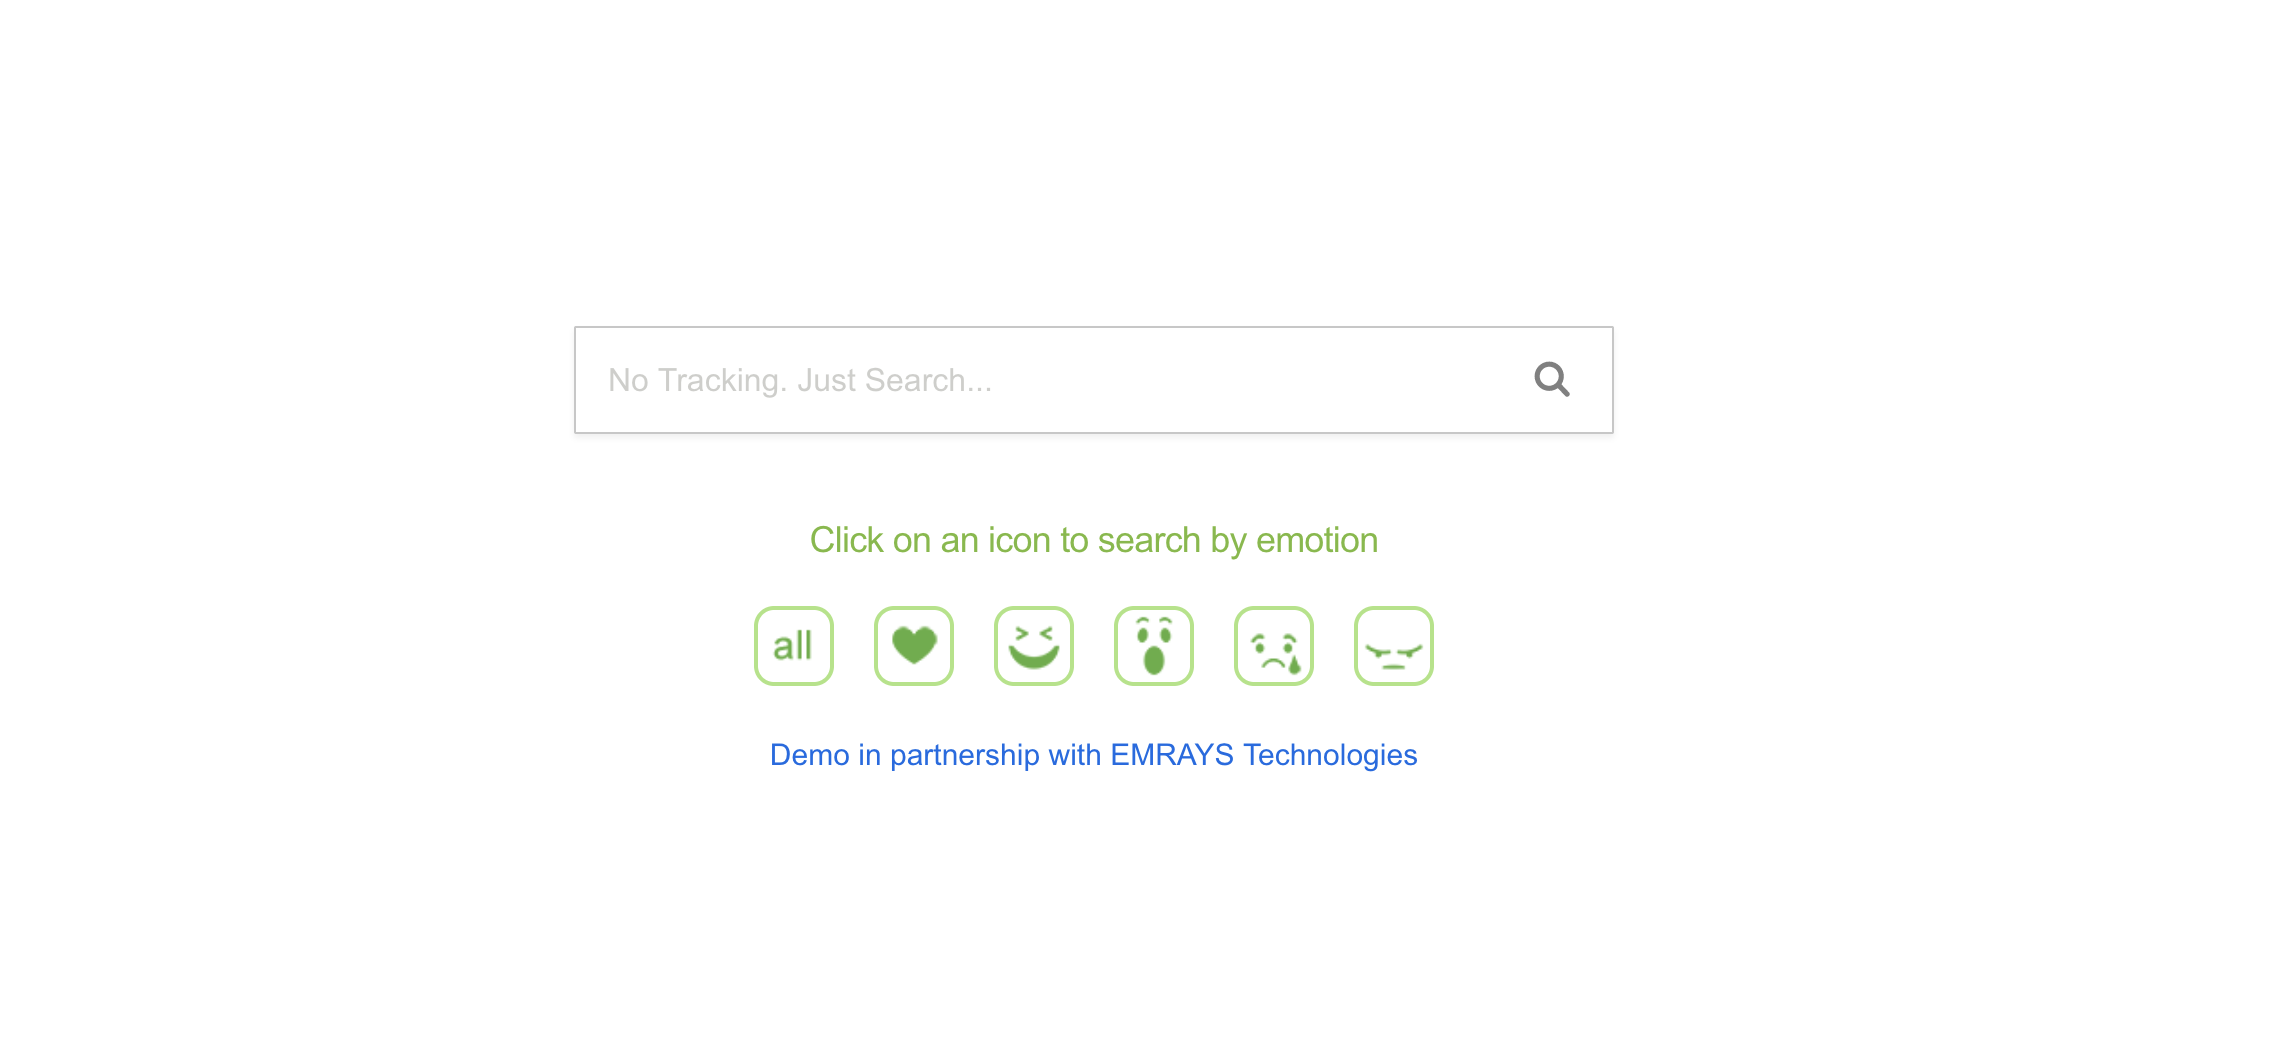 Mojeek and EMRAYS' Emotional Web Search